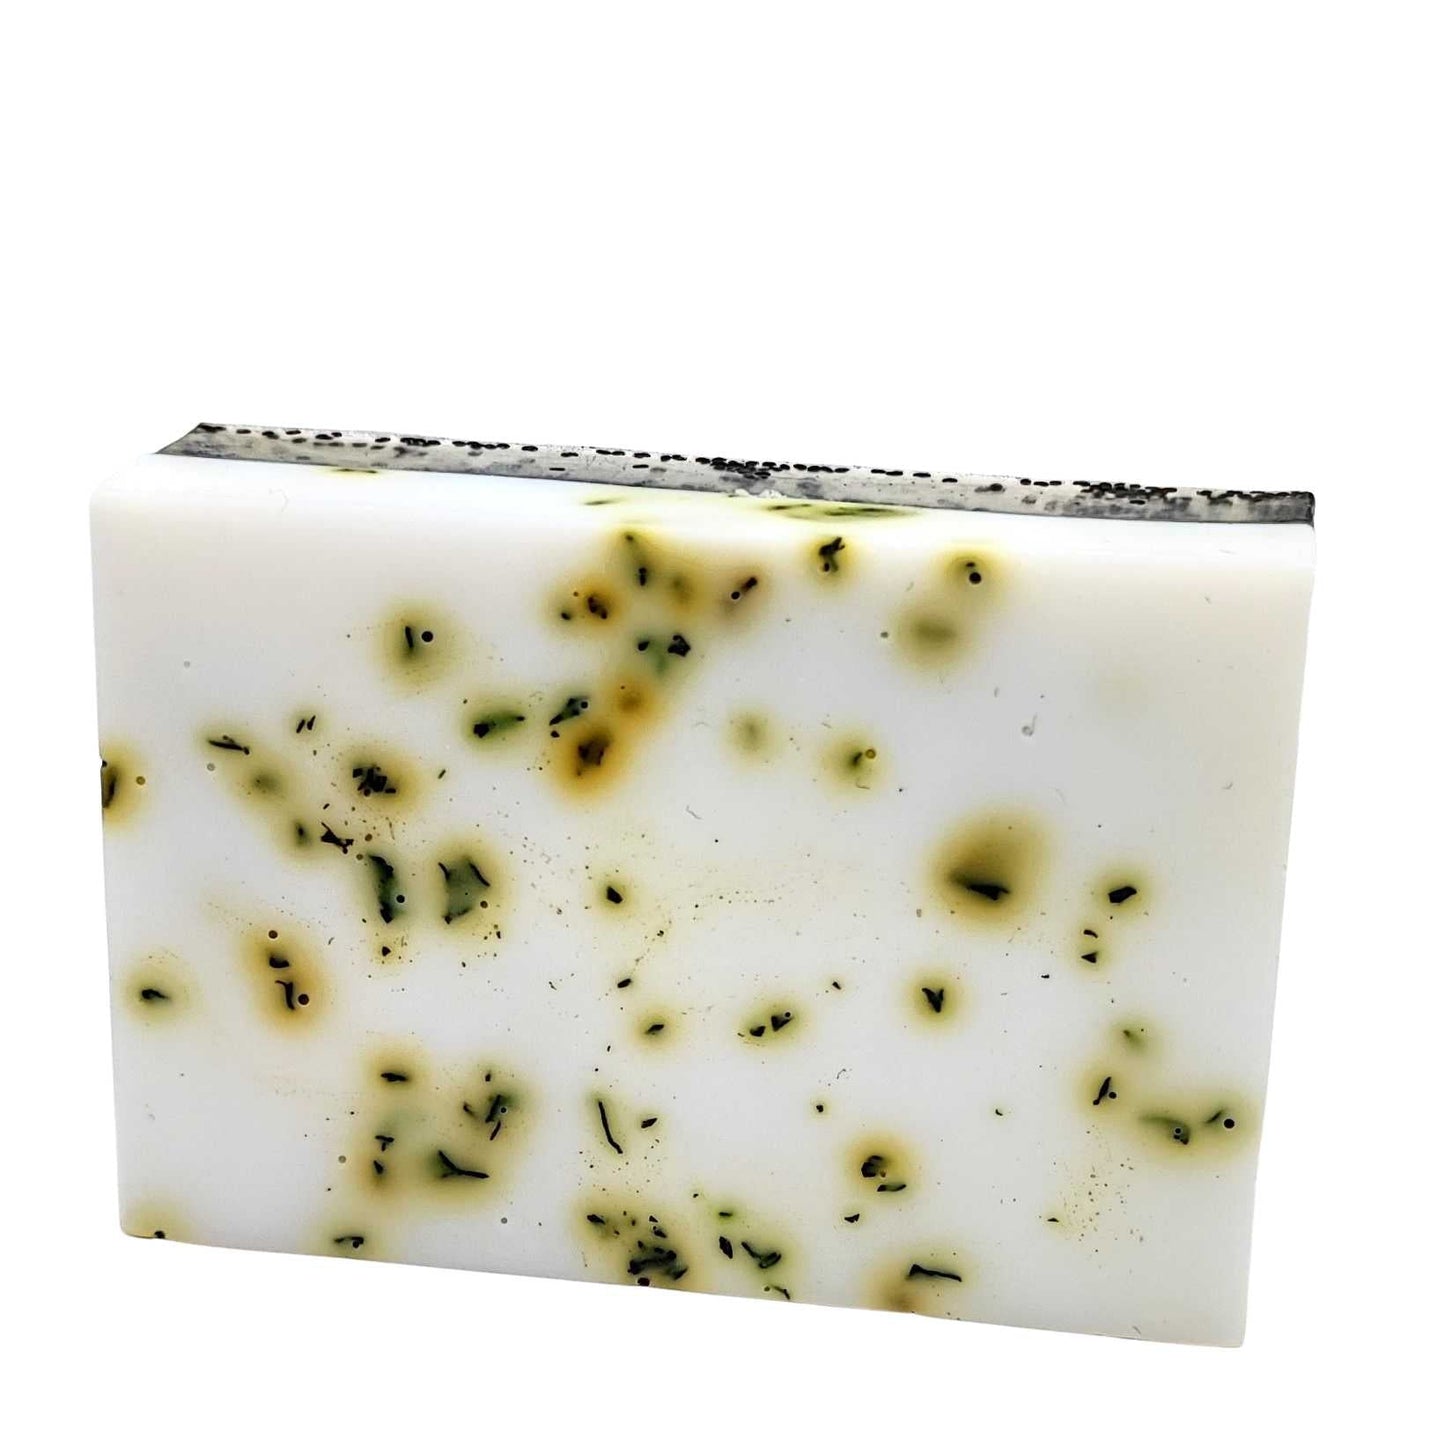 Soap Bar -Peppermint & Eucalyptus -4oz -Herbal Scent -Aromes Evasions 